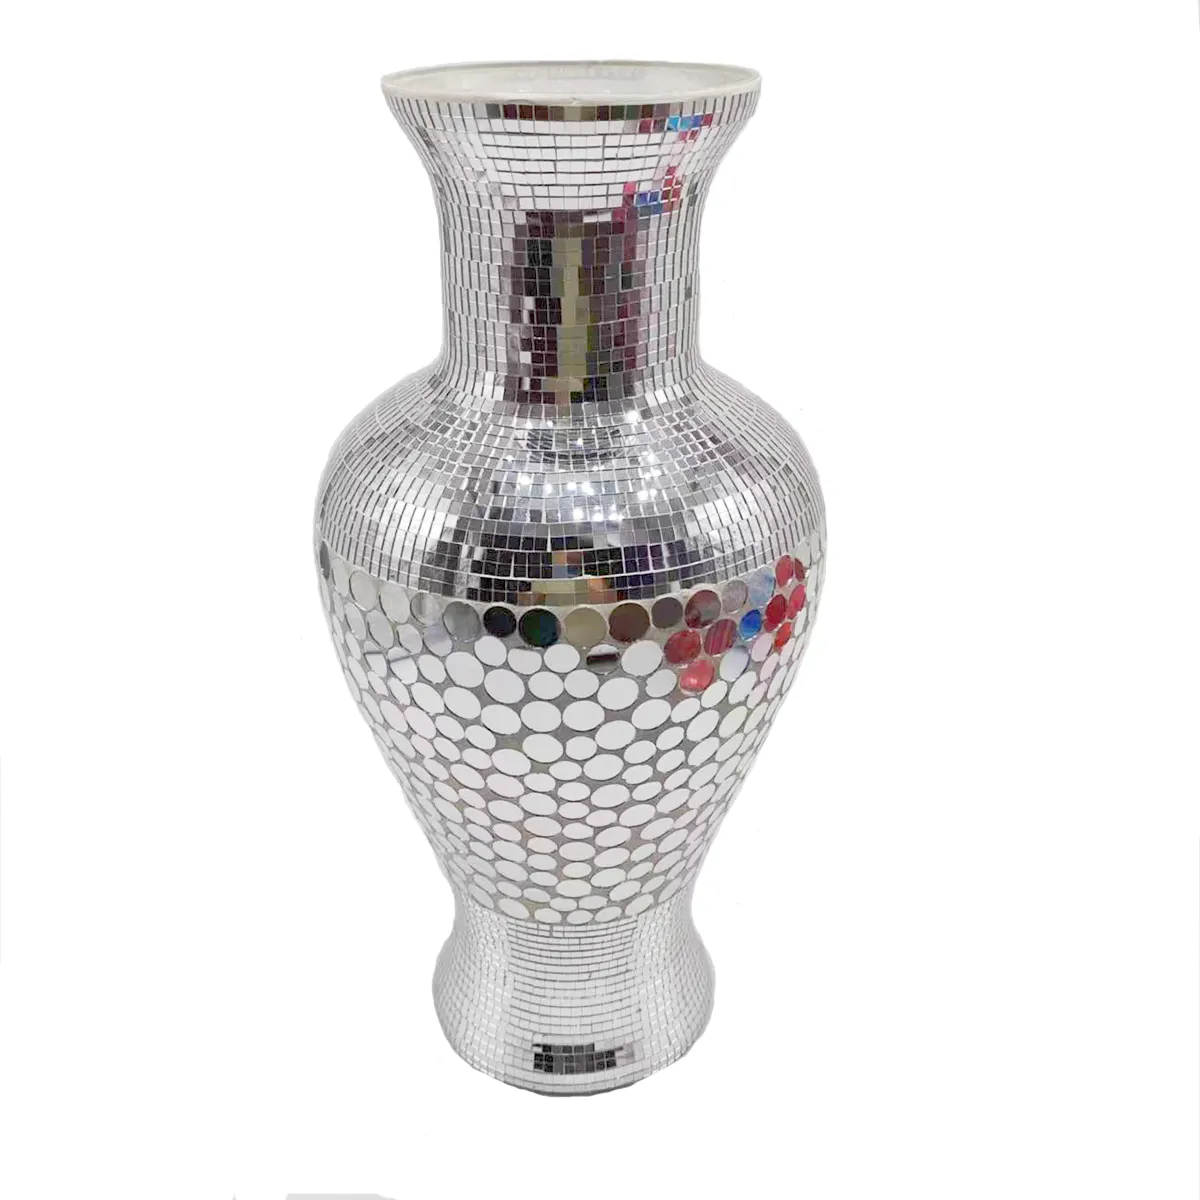 Wholesale Europe Hot Seller Big Glass Mosaic Vases Home Wedding Centerpiece Art Decor Silver Mosaic Design Glass Vase